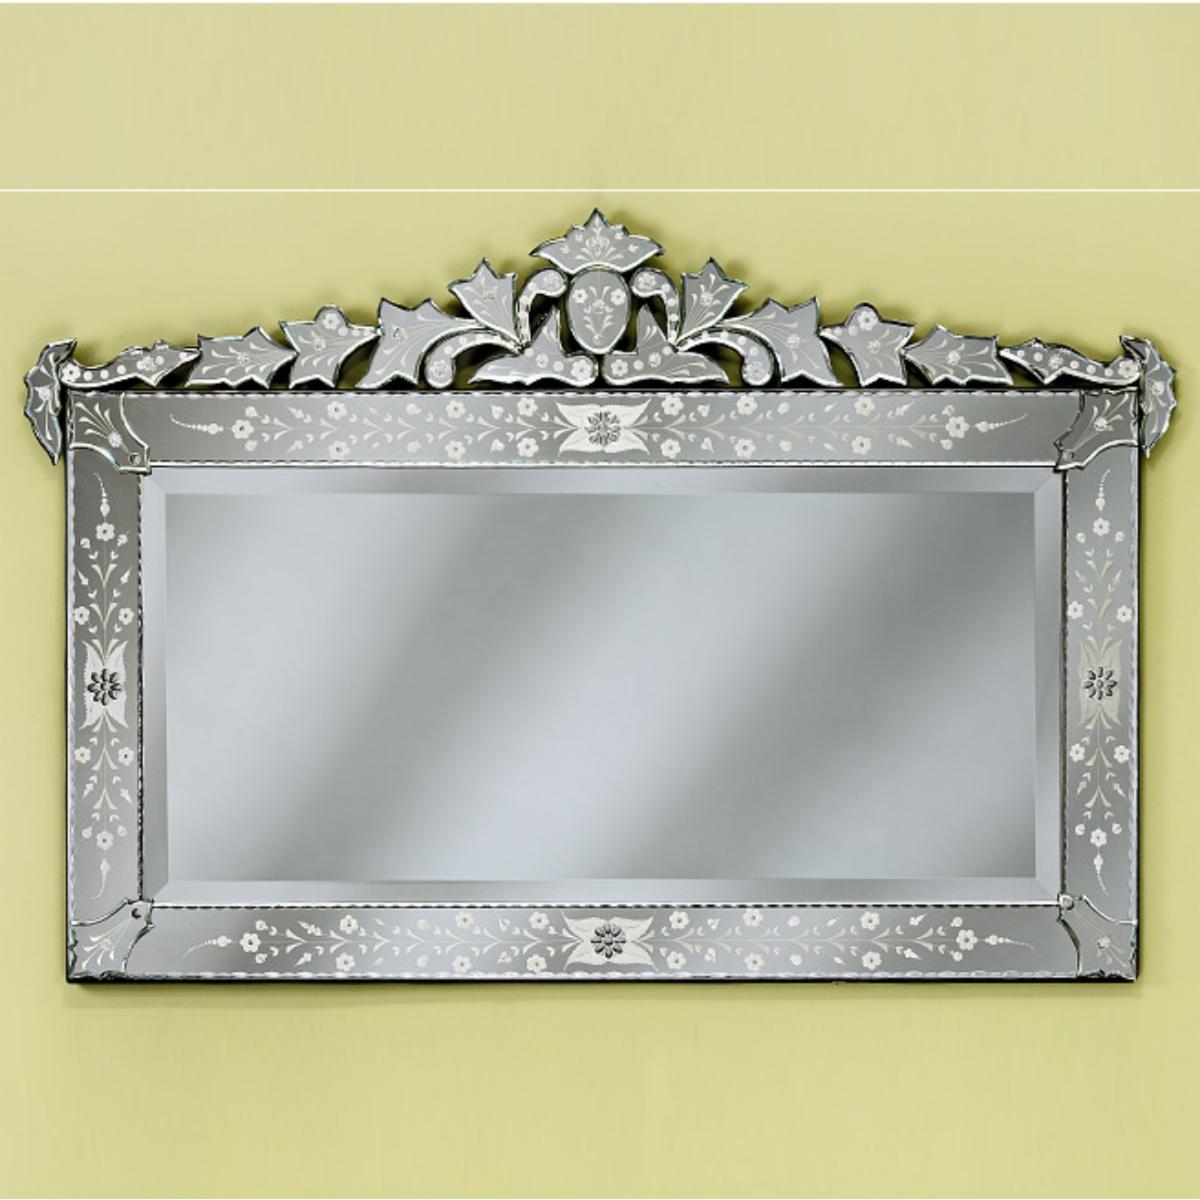 Large rectangular mirrors for walls 20